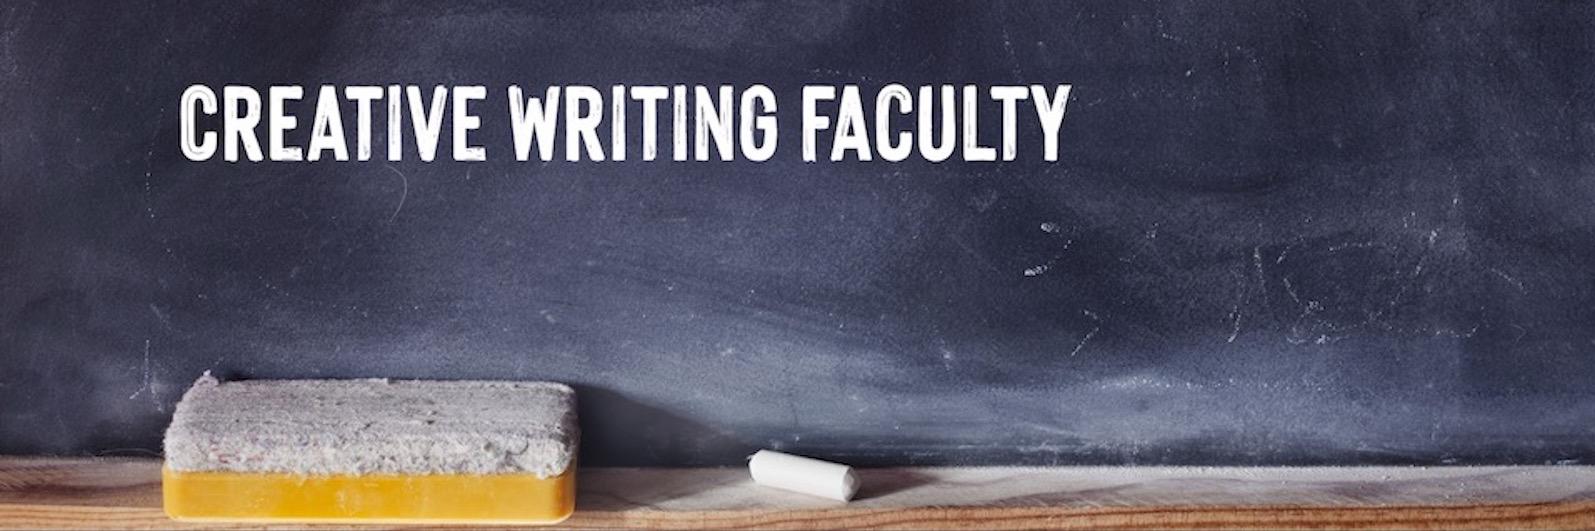 Chalkboard saying "Creative Writing Faculty"